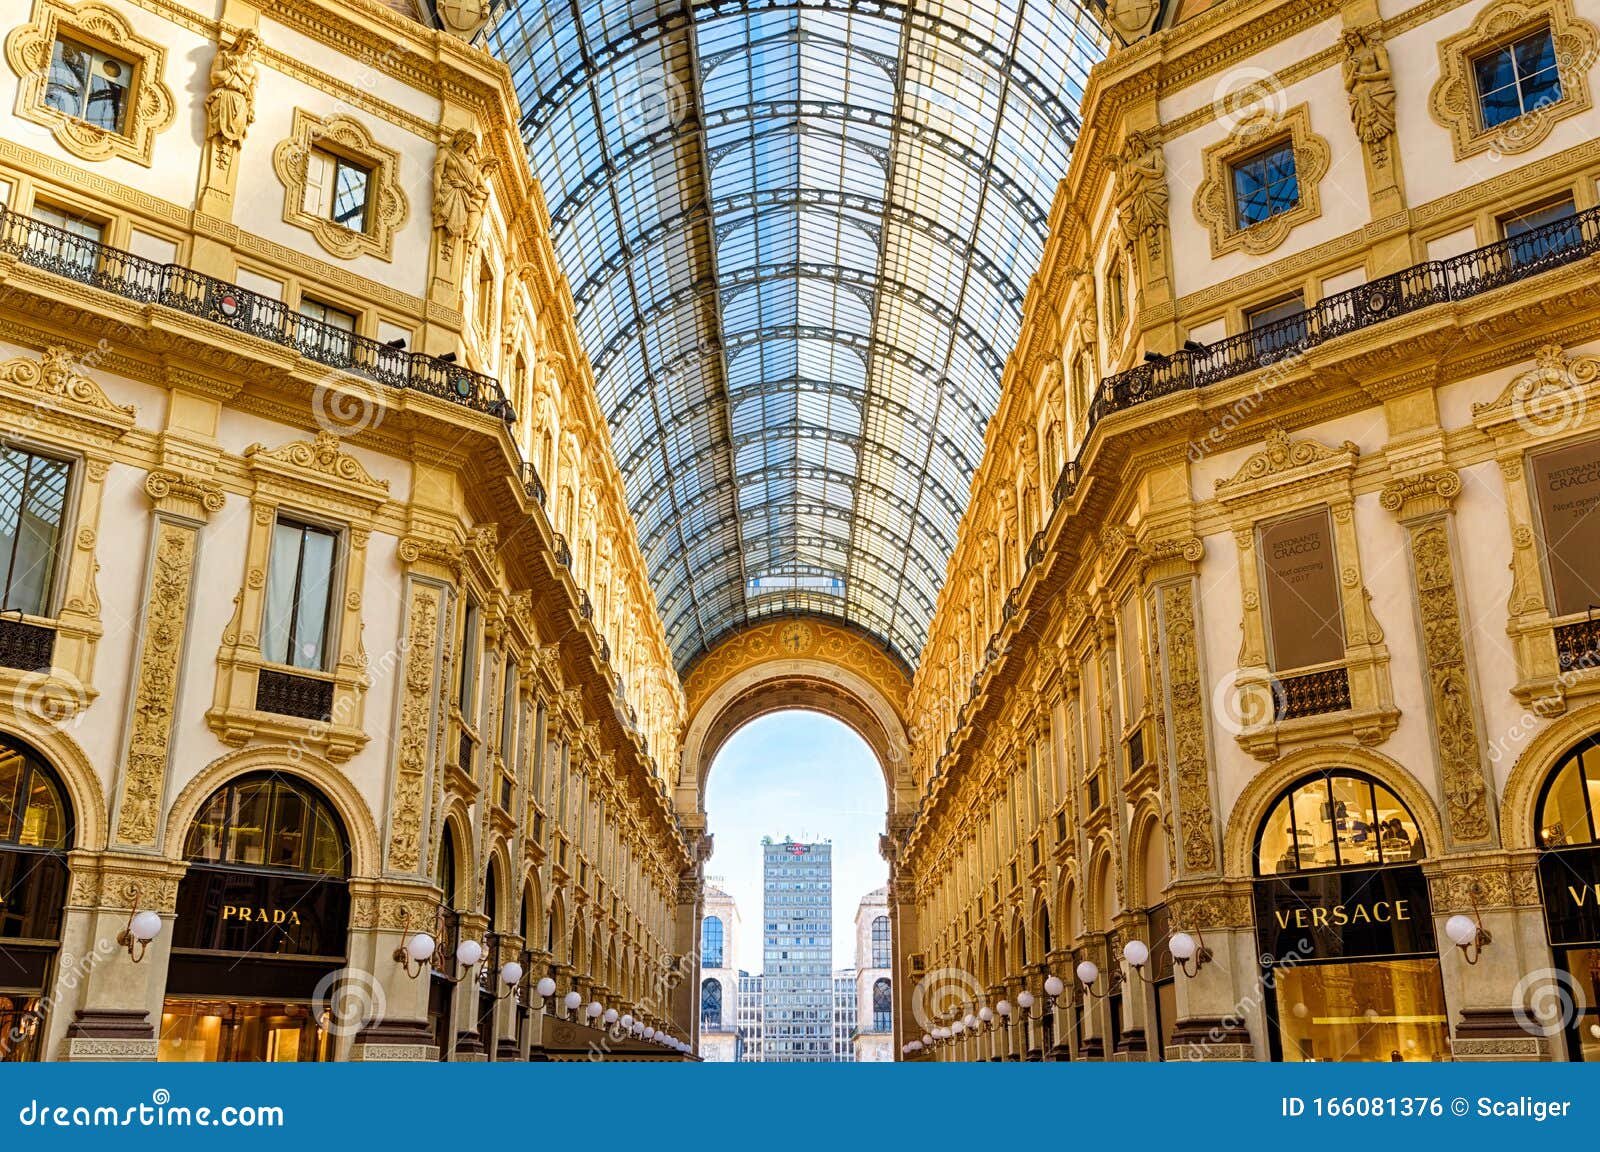 Another major landmark in Milan is the beautiful Galleria Vittorio